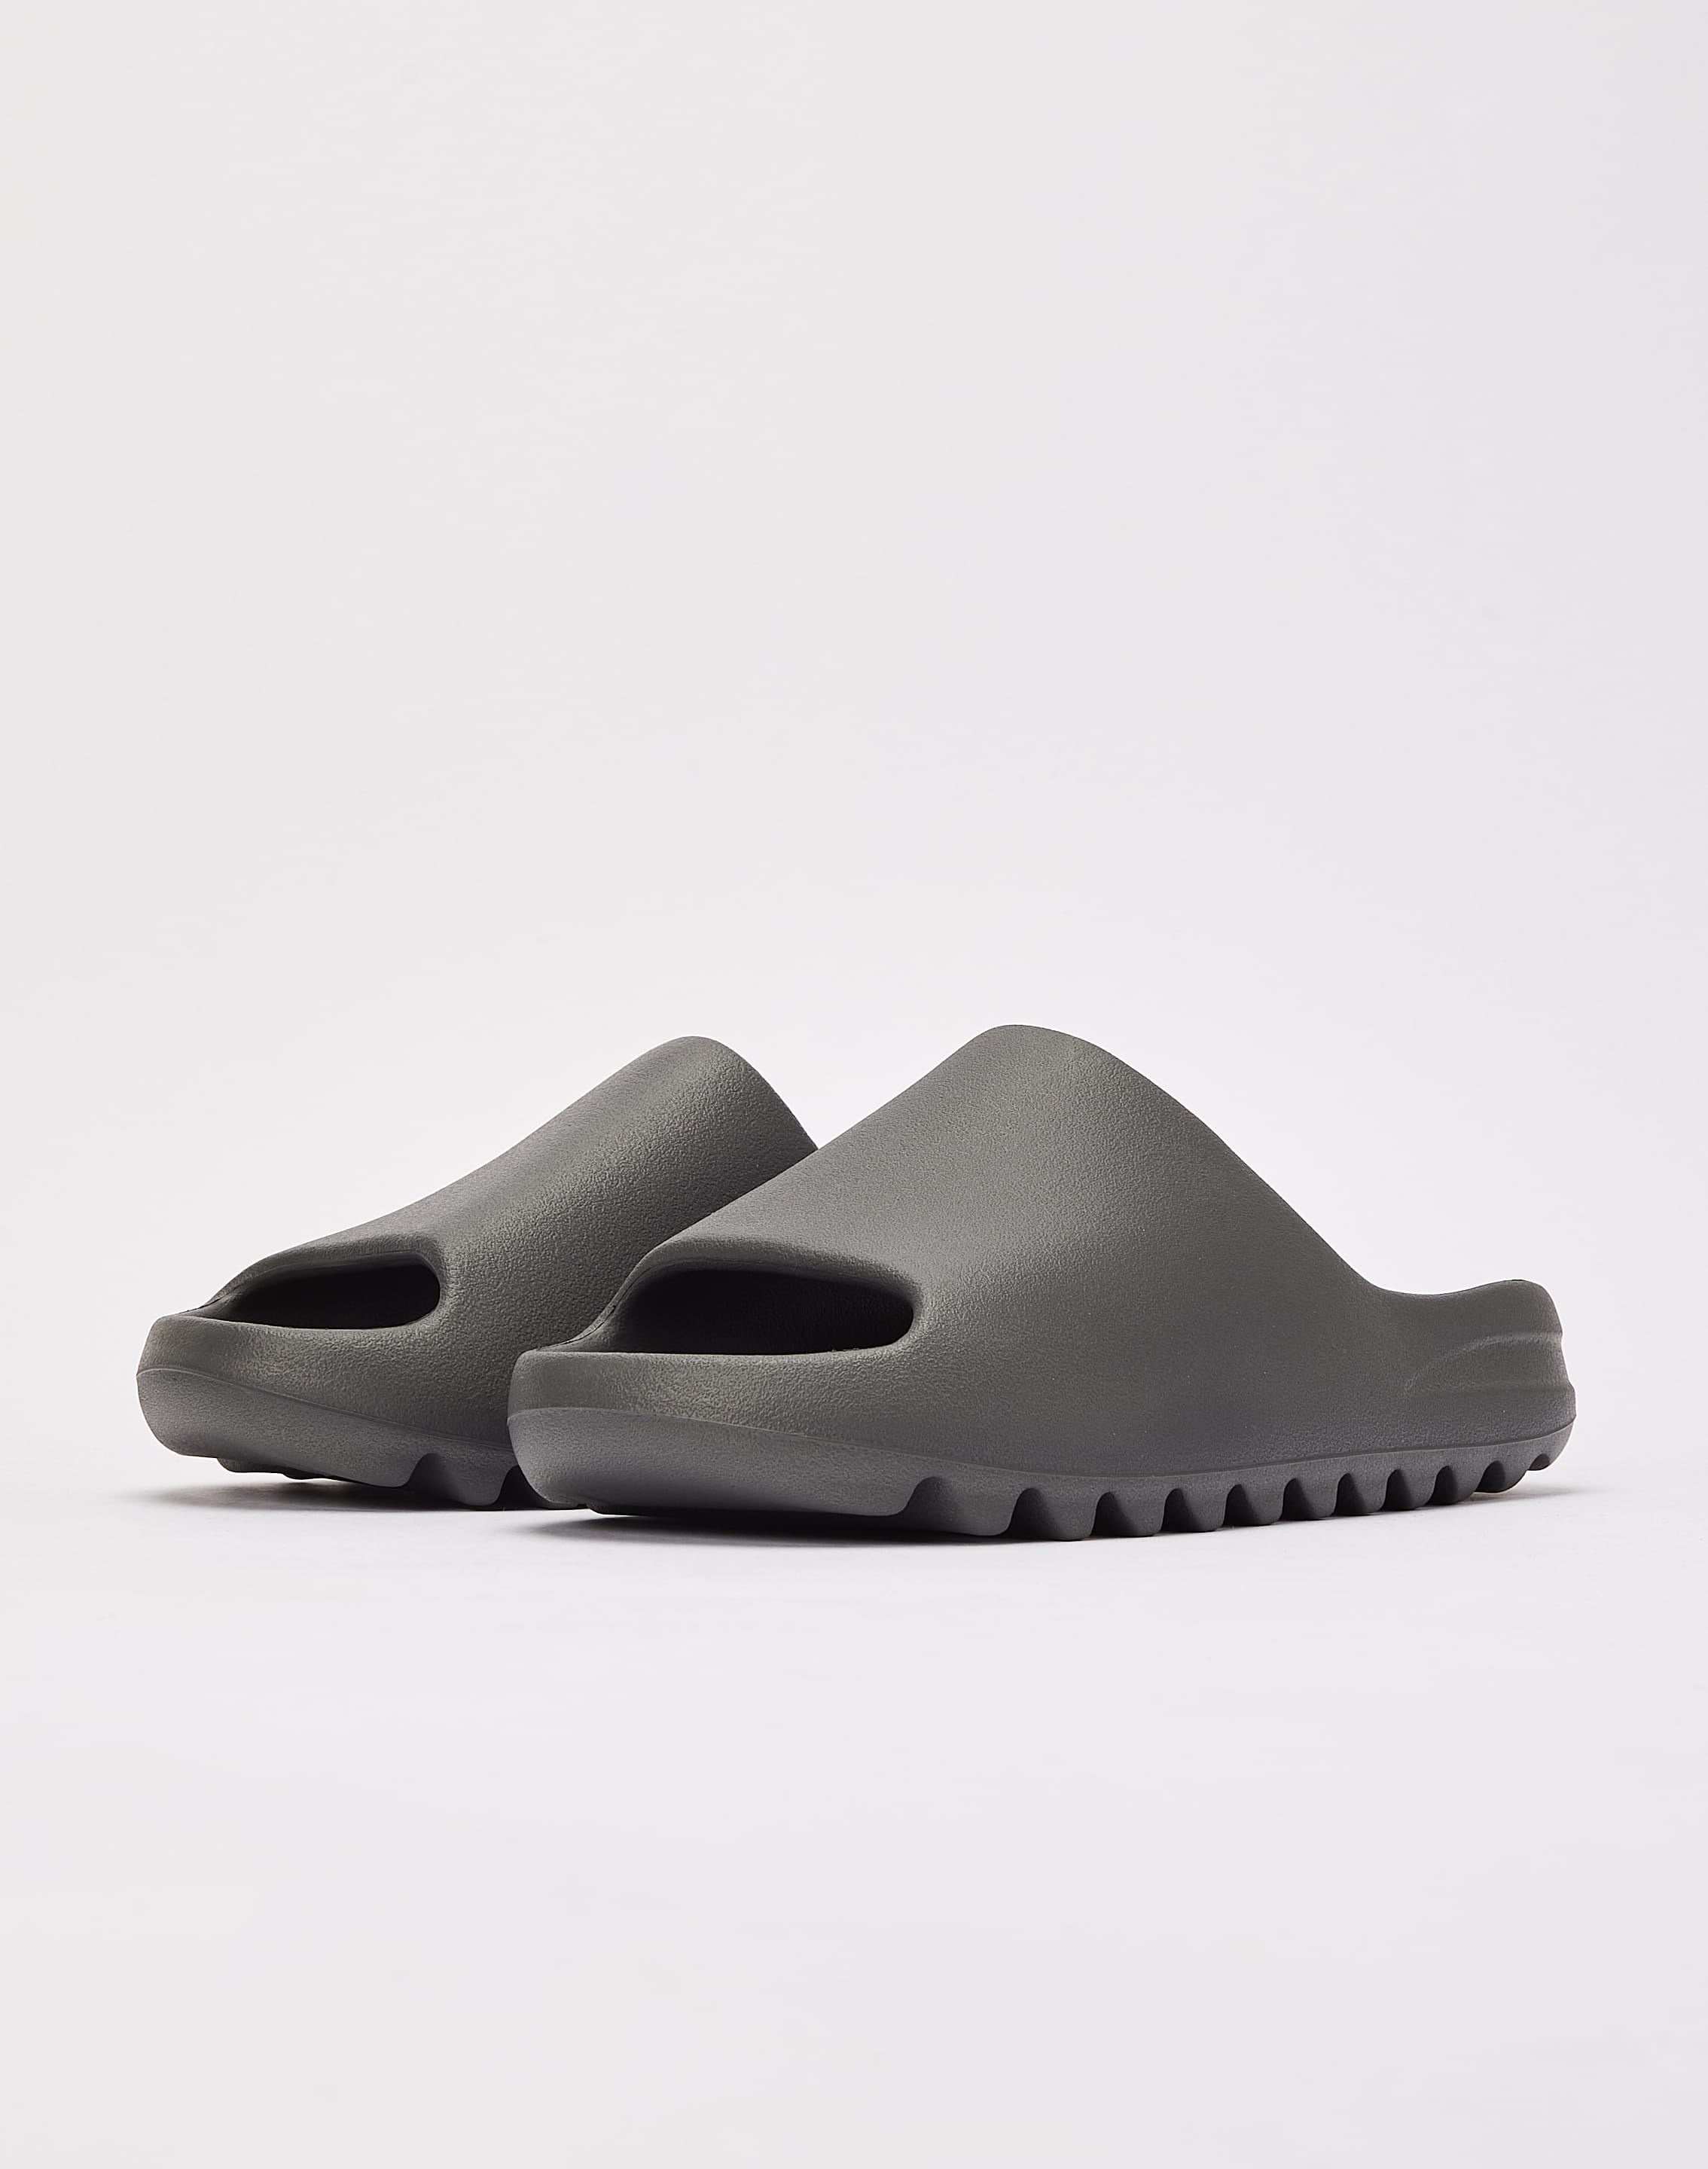 Adidas Yeezy Slide 'Granite'